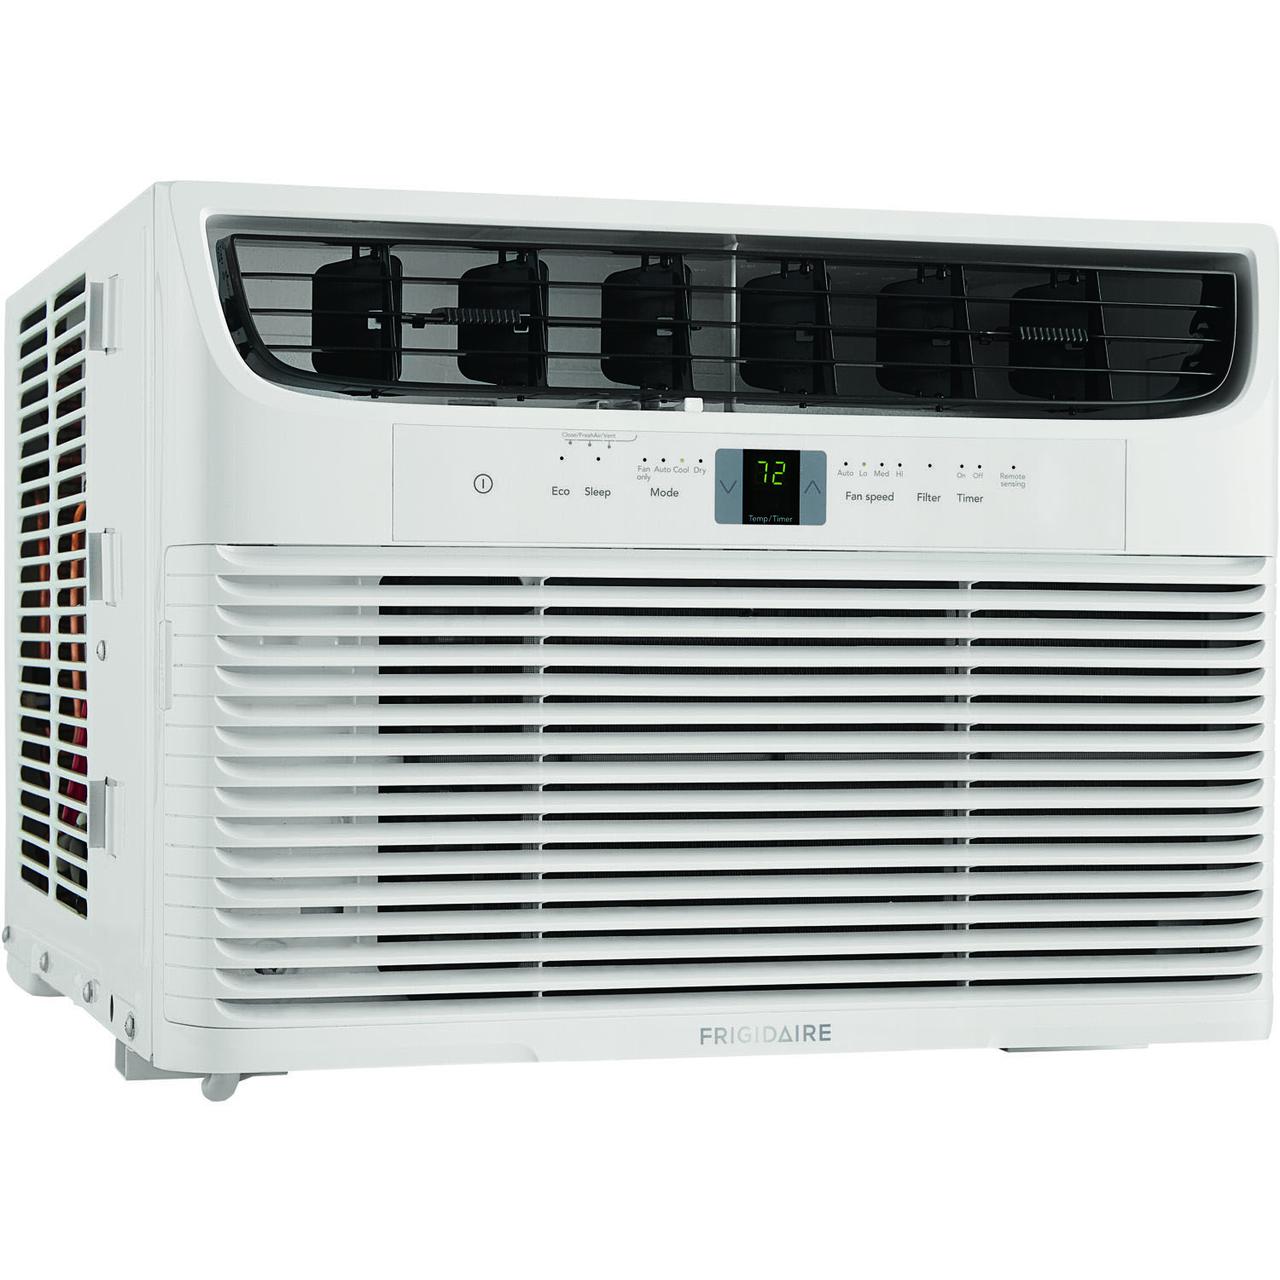 Frigidaire 15,100 BTU Window Air Conditioner with Remote in White - image 5 of 7